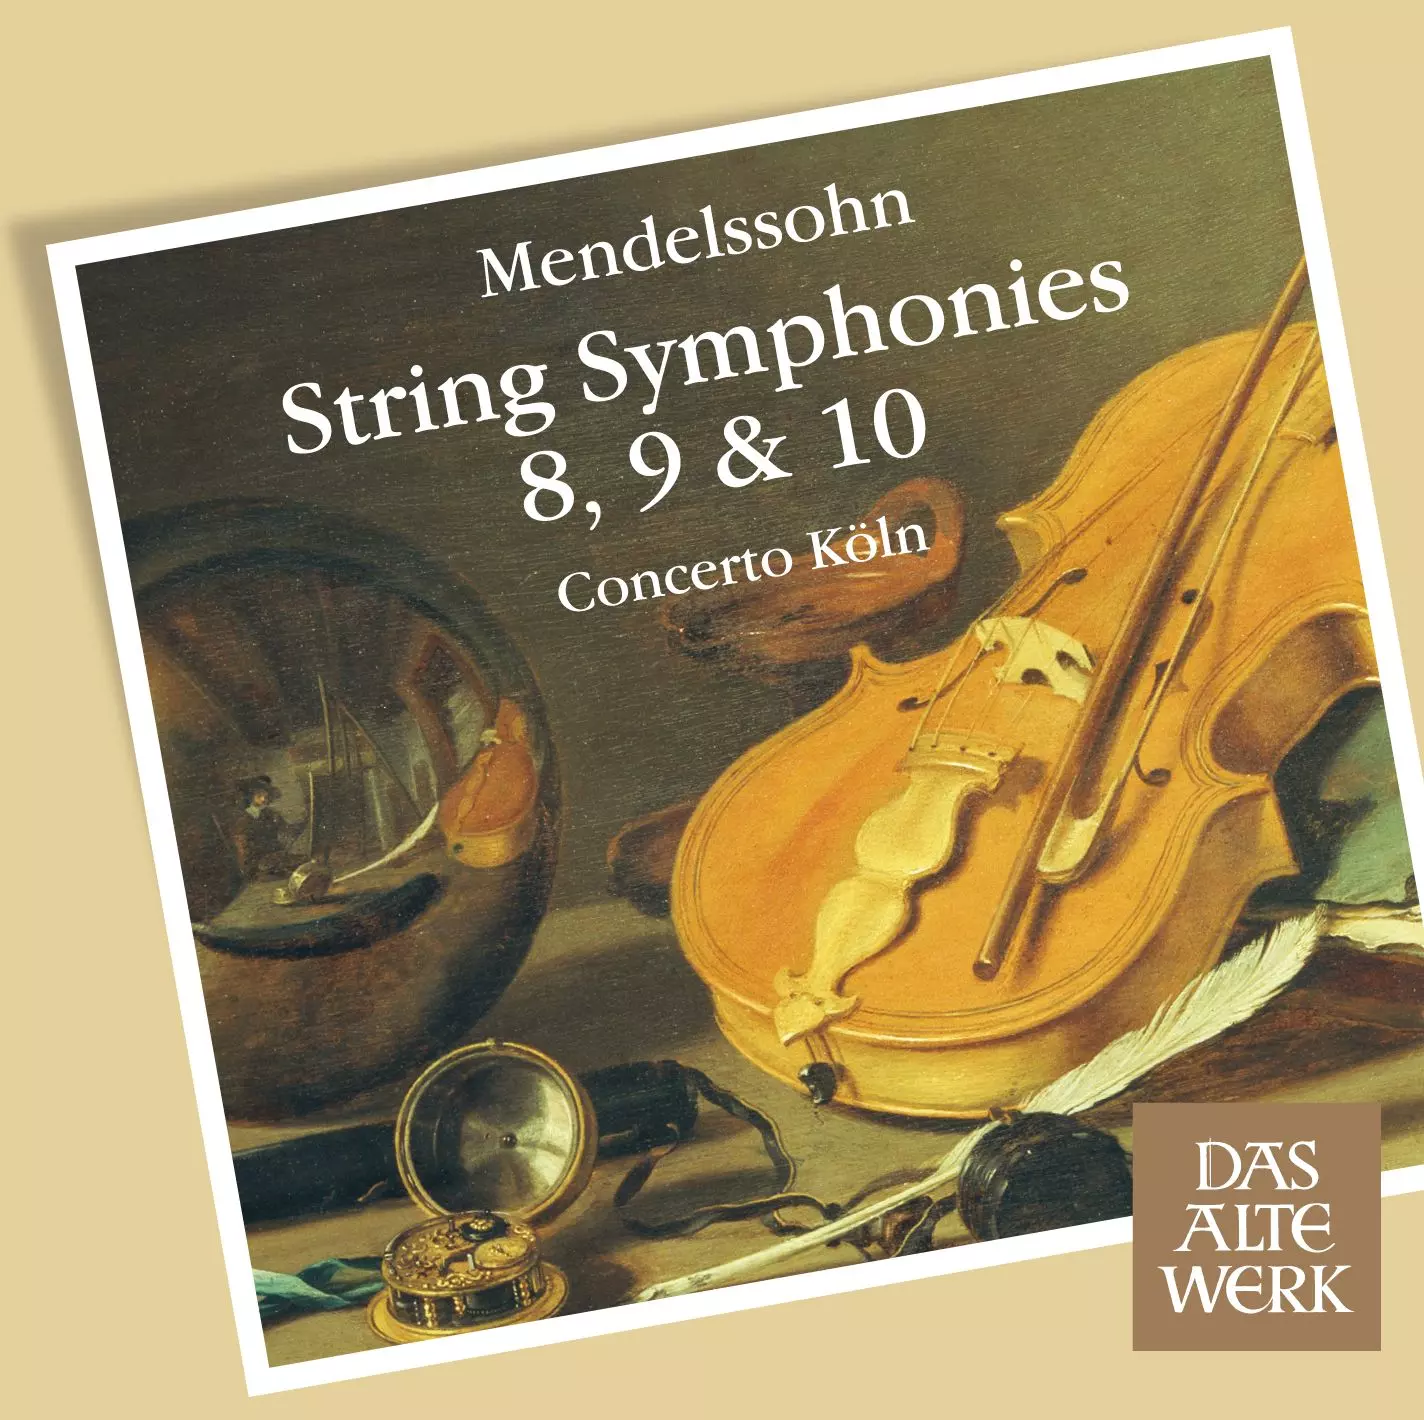 String Symphonies